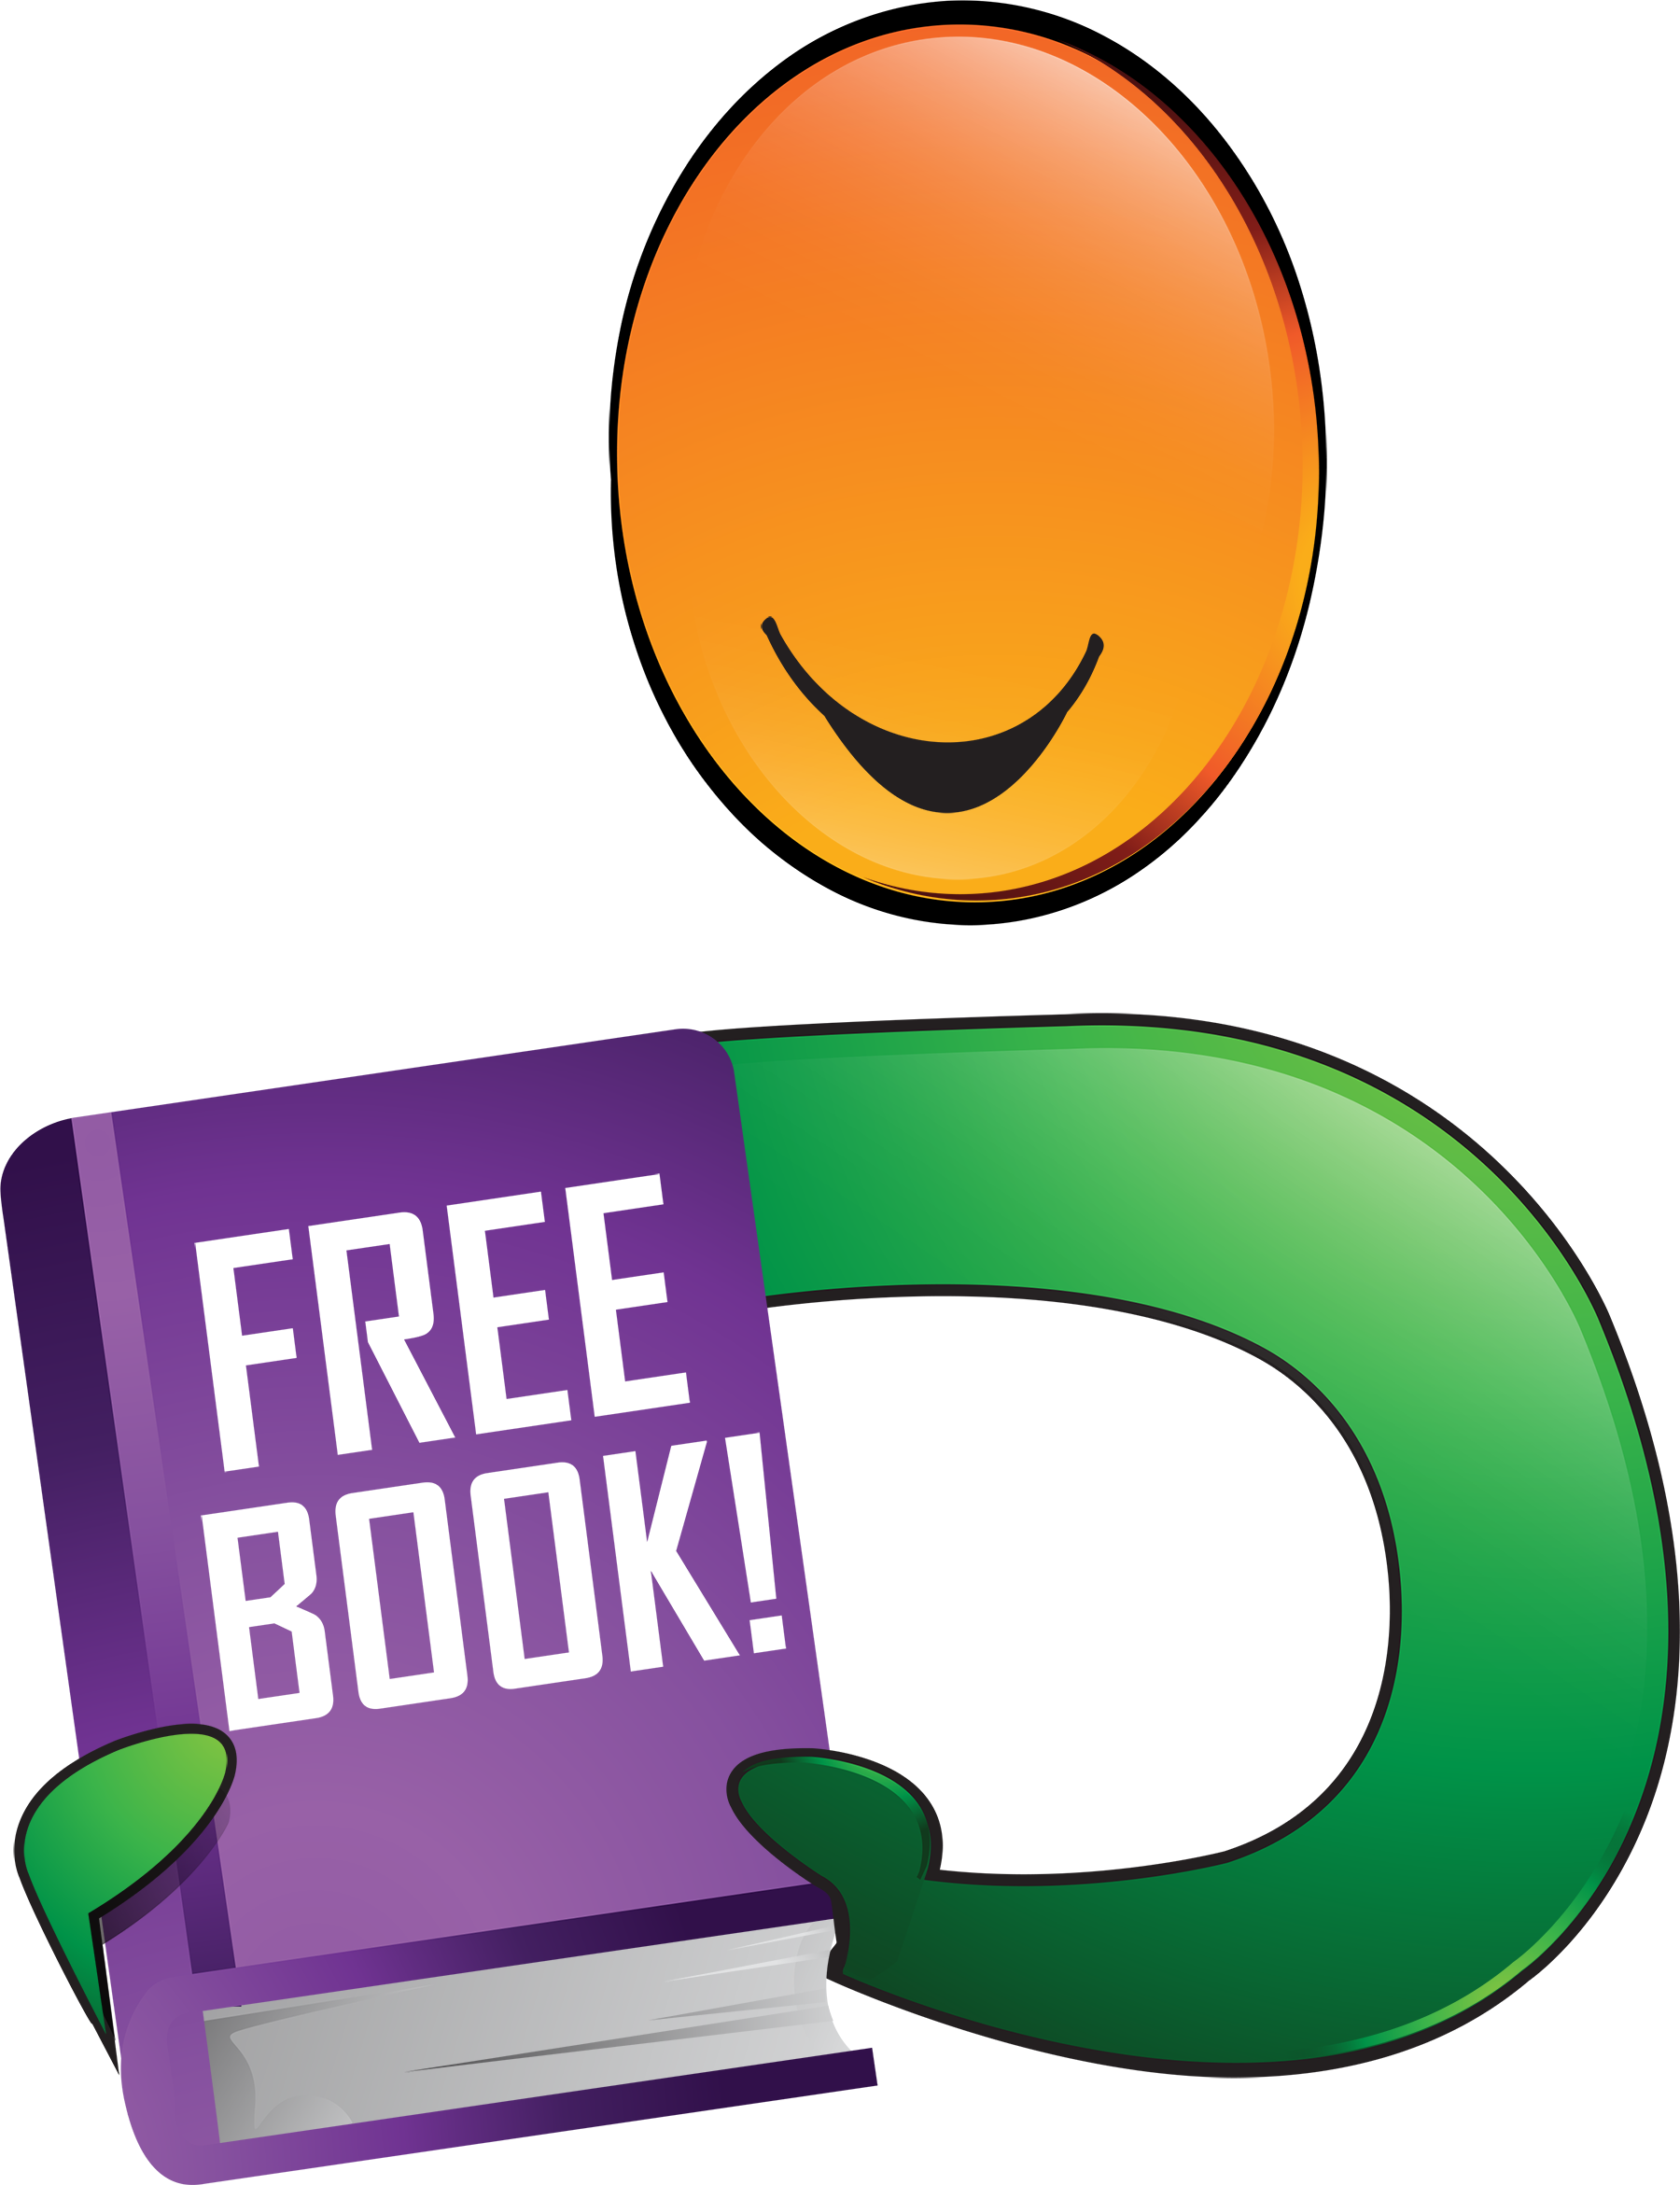 Get Free Book